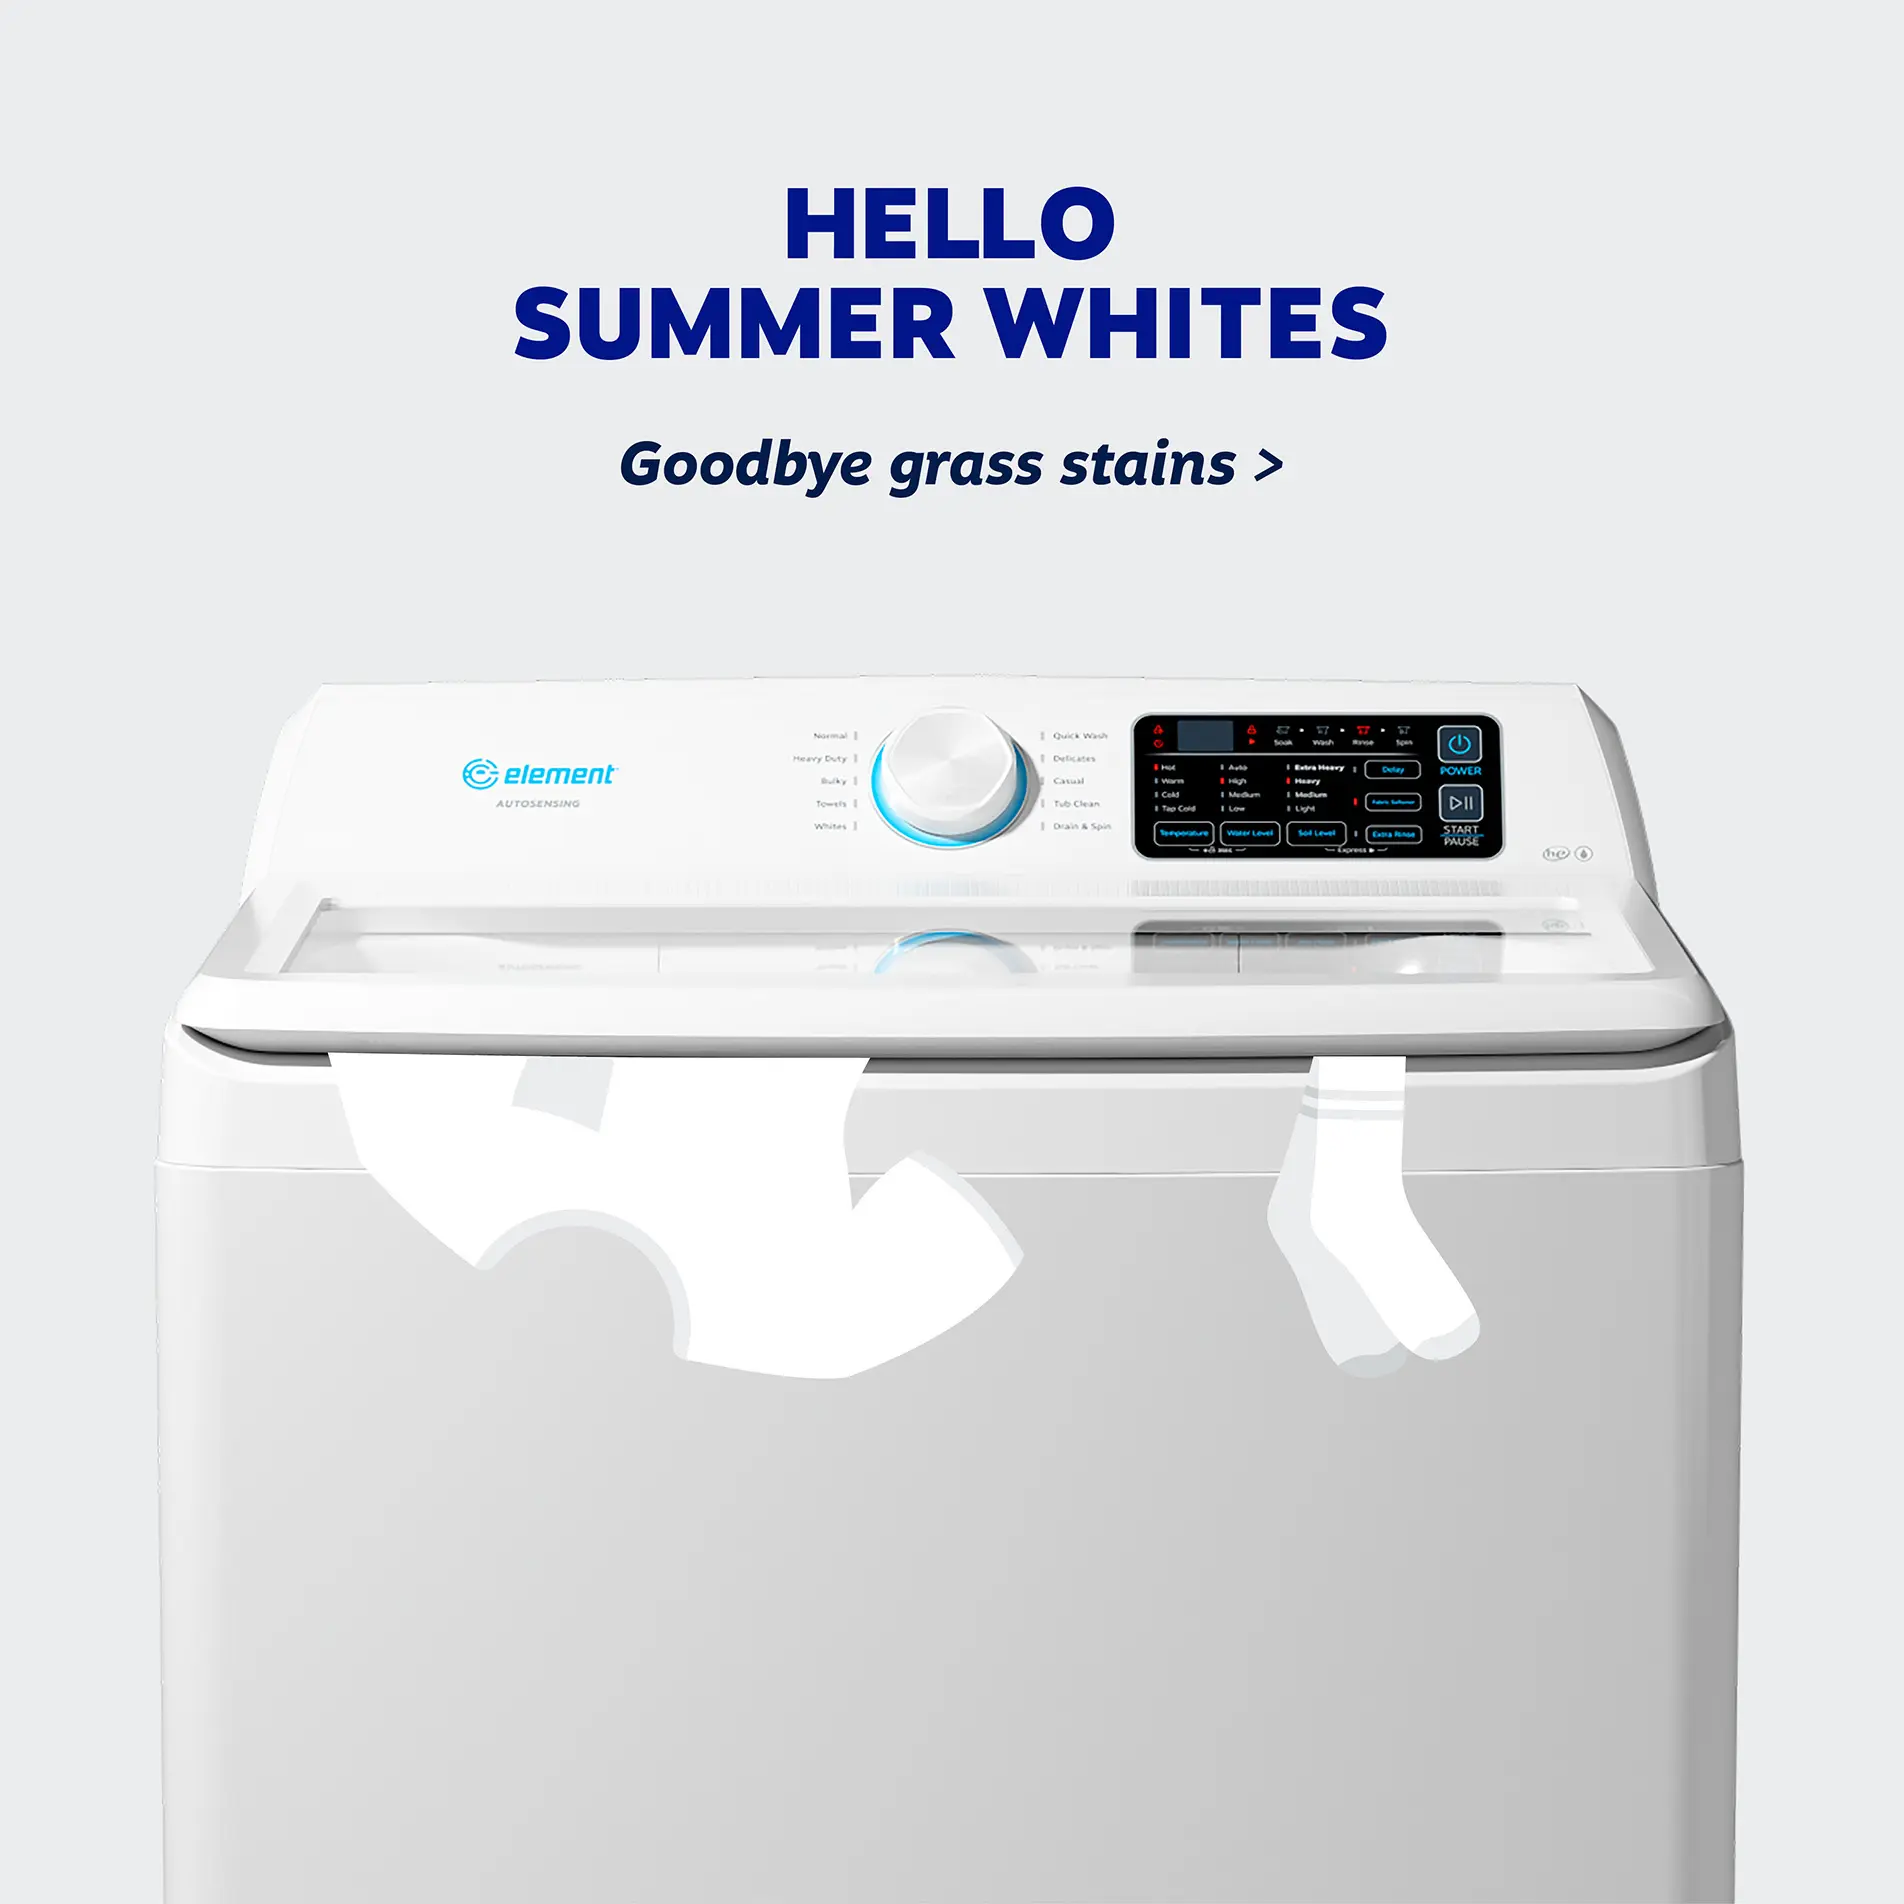 Element washing machines: hello summer whites - goodbye grass stains